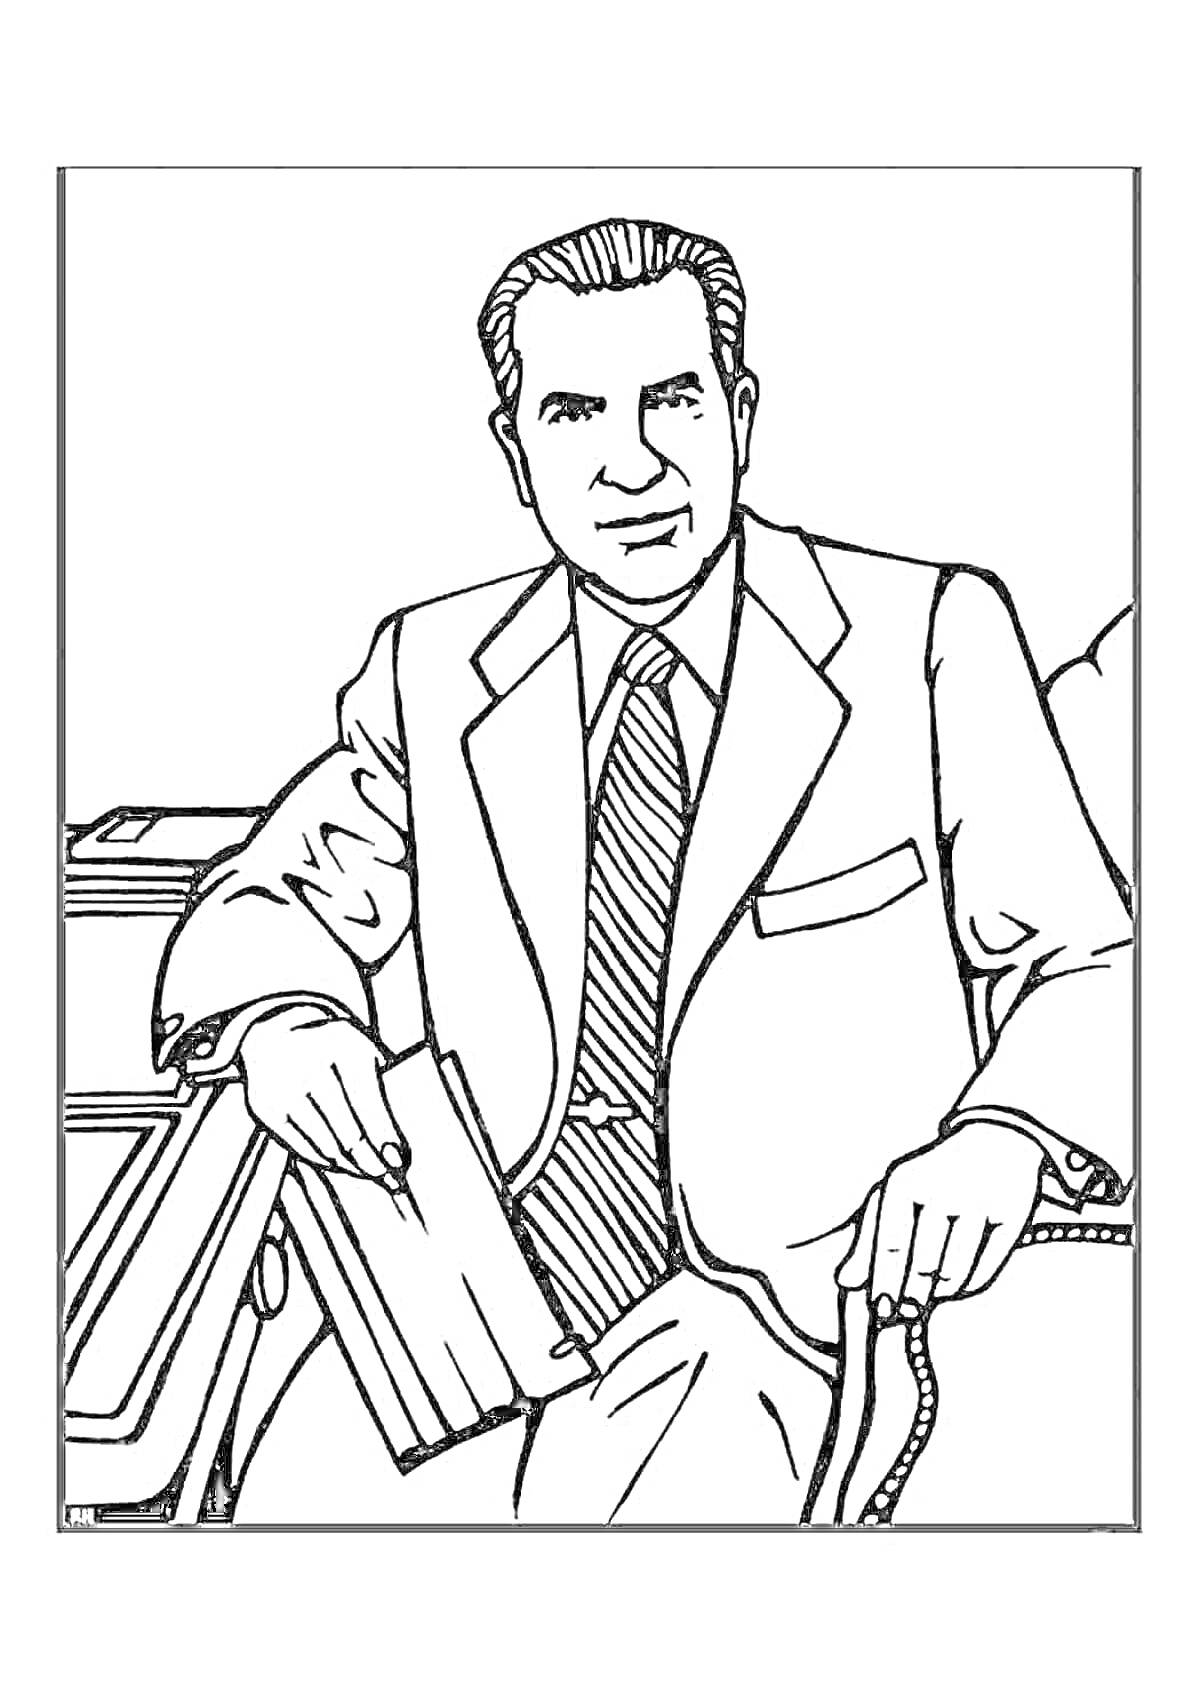 Мужчина в костюме с галстуком, сидящий за столом с документами